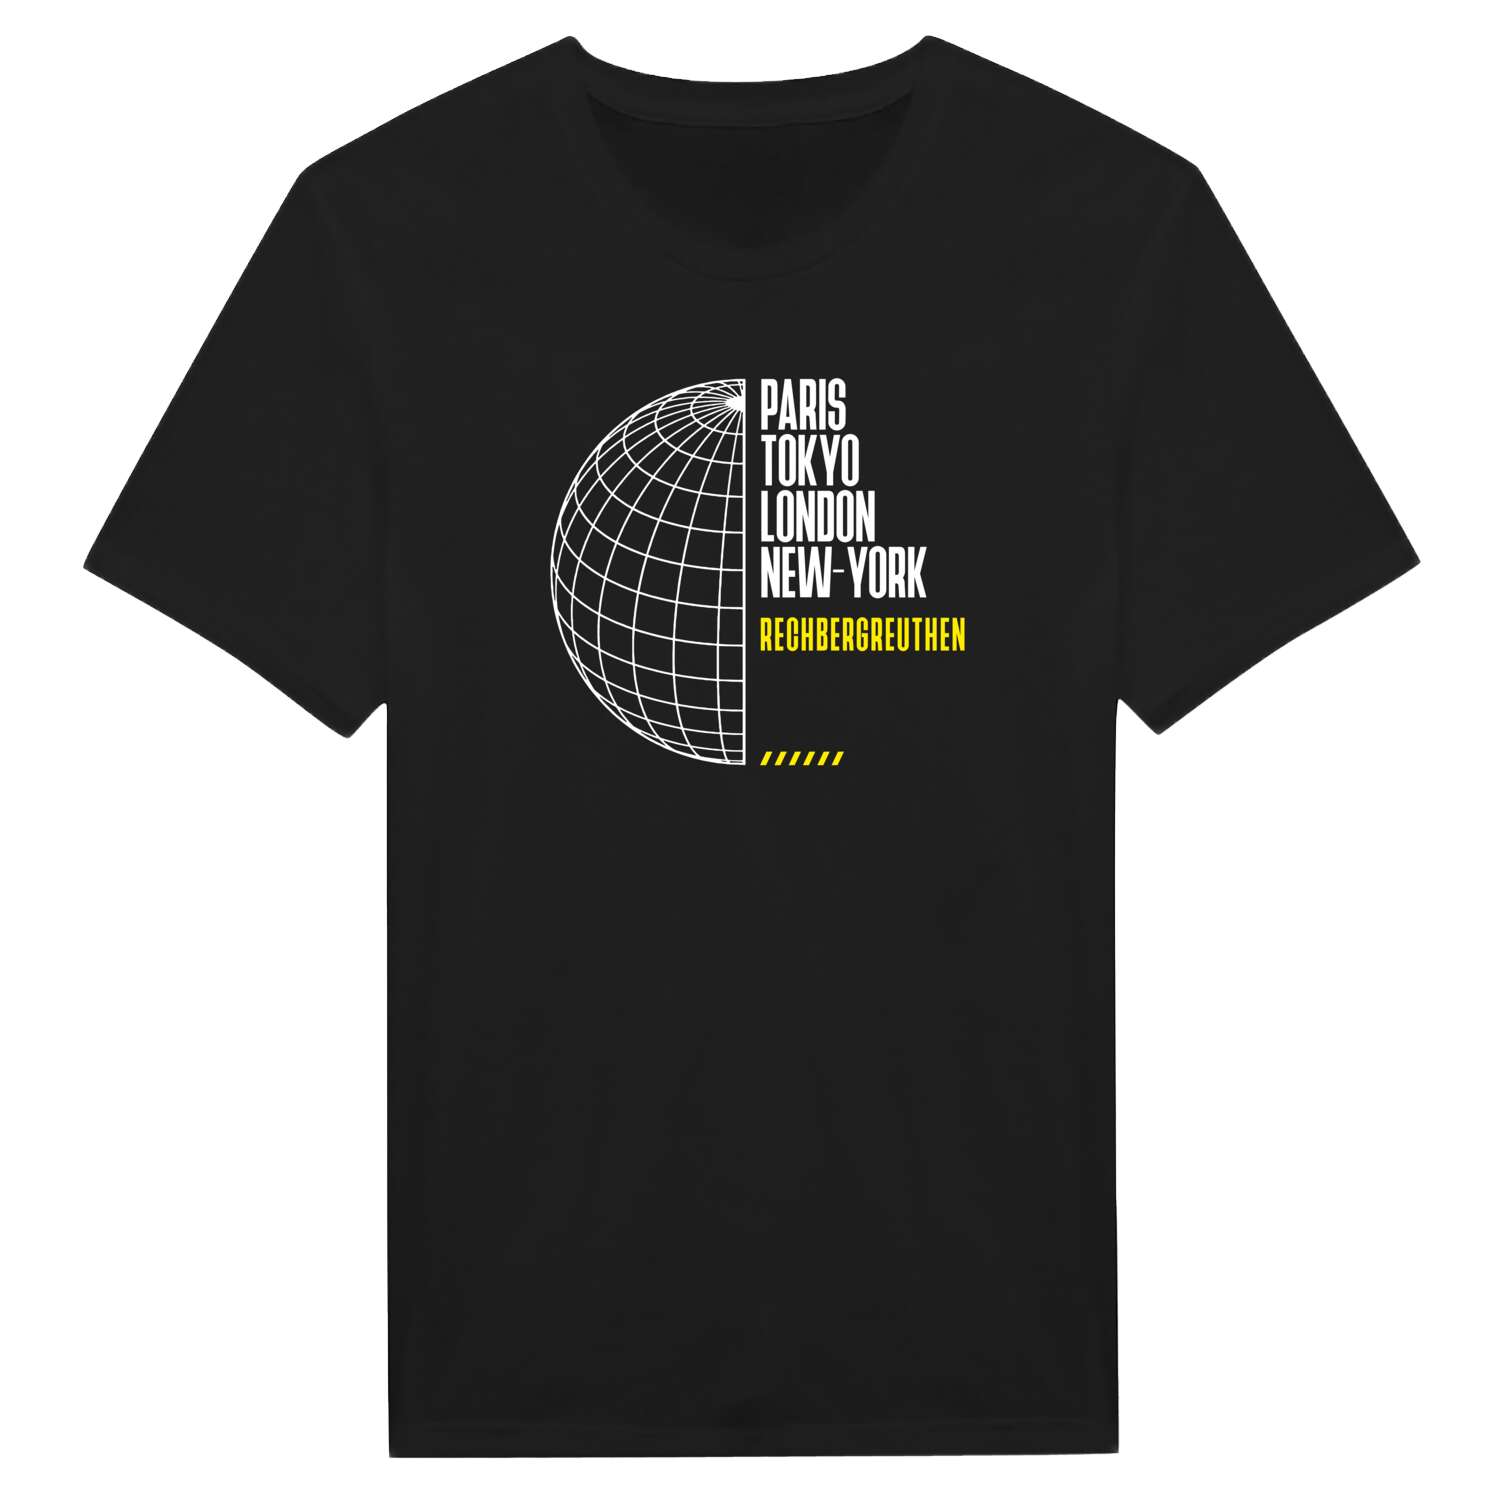 Rechbergreuthen T-Shirt »Paris Tokyo London«